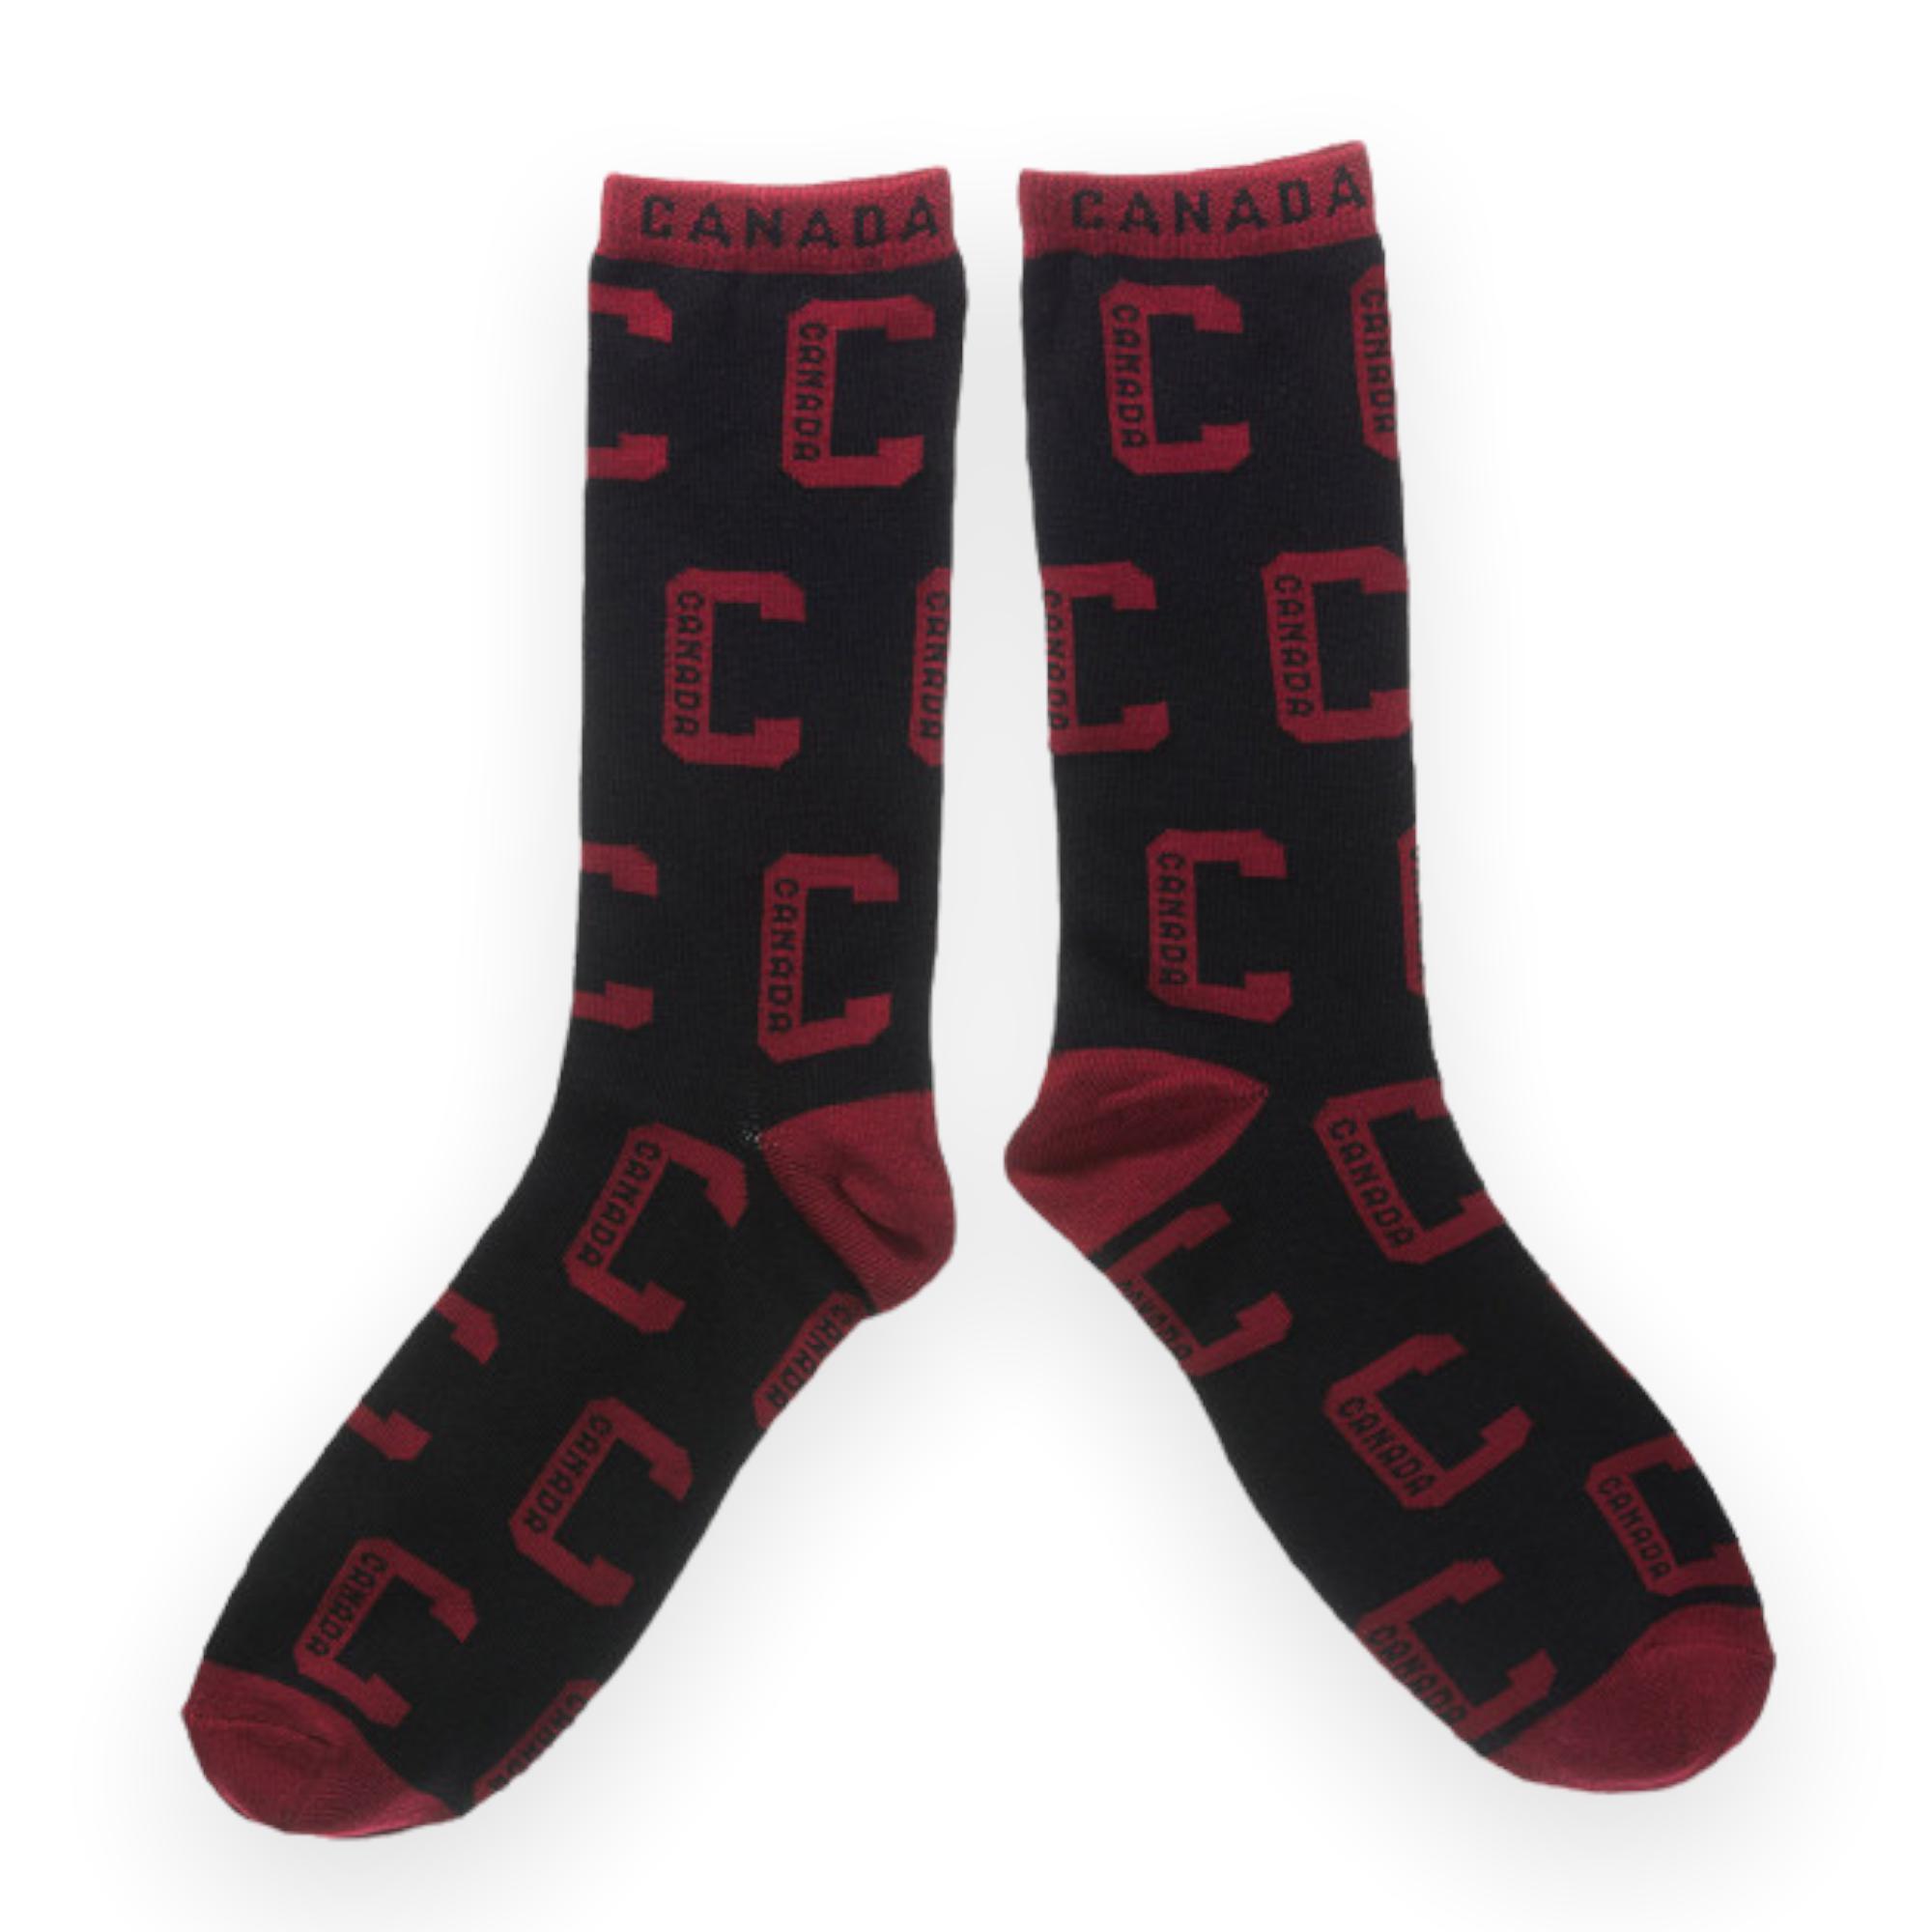 Socks - Black W/ Red or Black W/ White "C" Canada Pattern